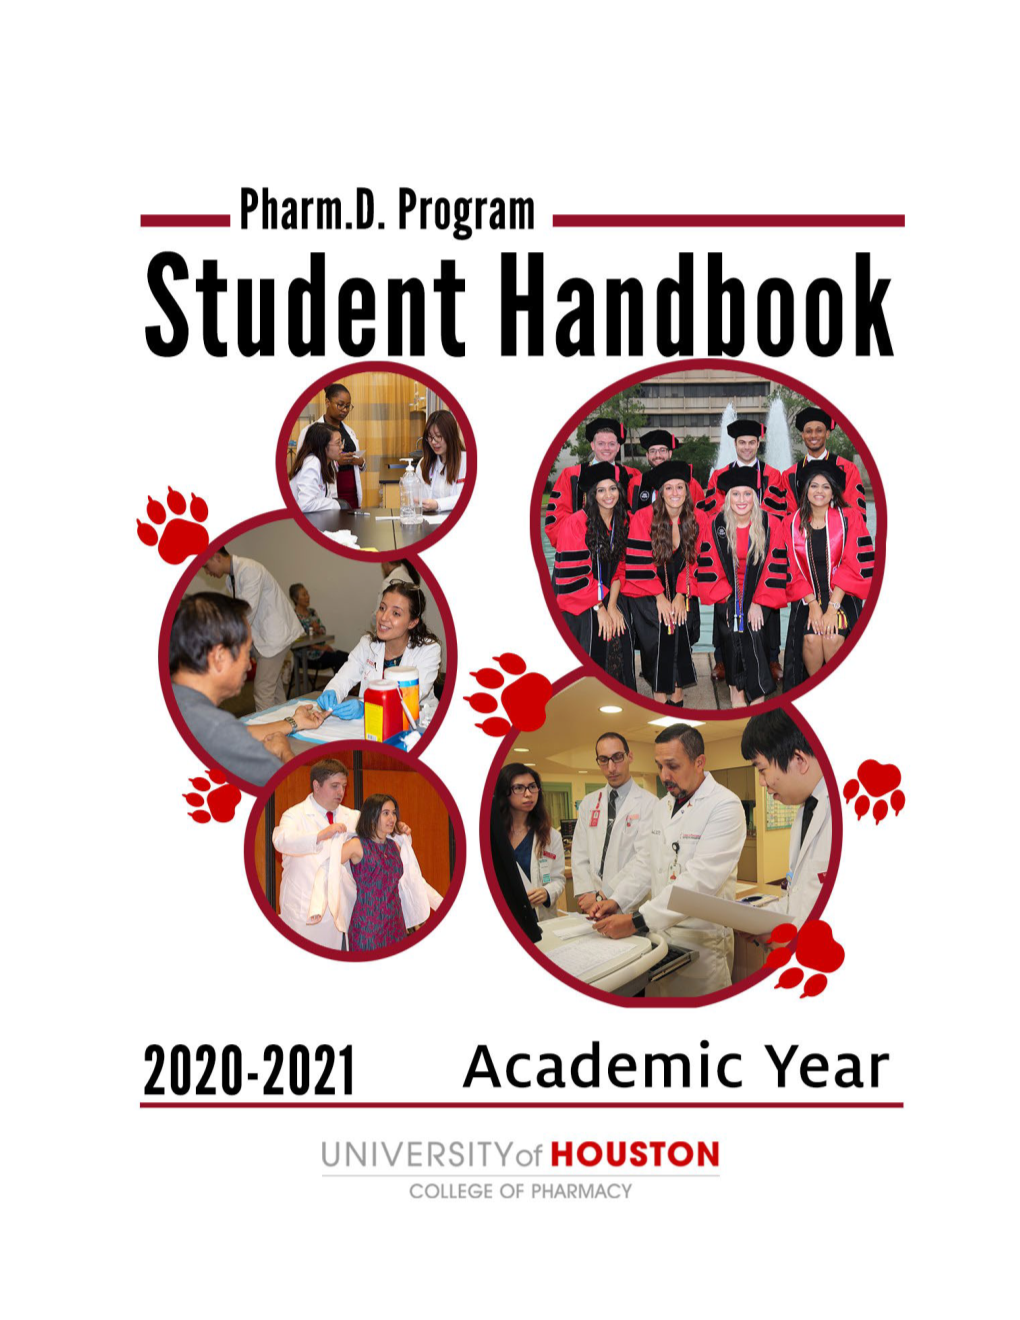 University of Houston College of Pharmacy Student Handbook